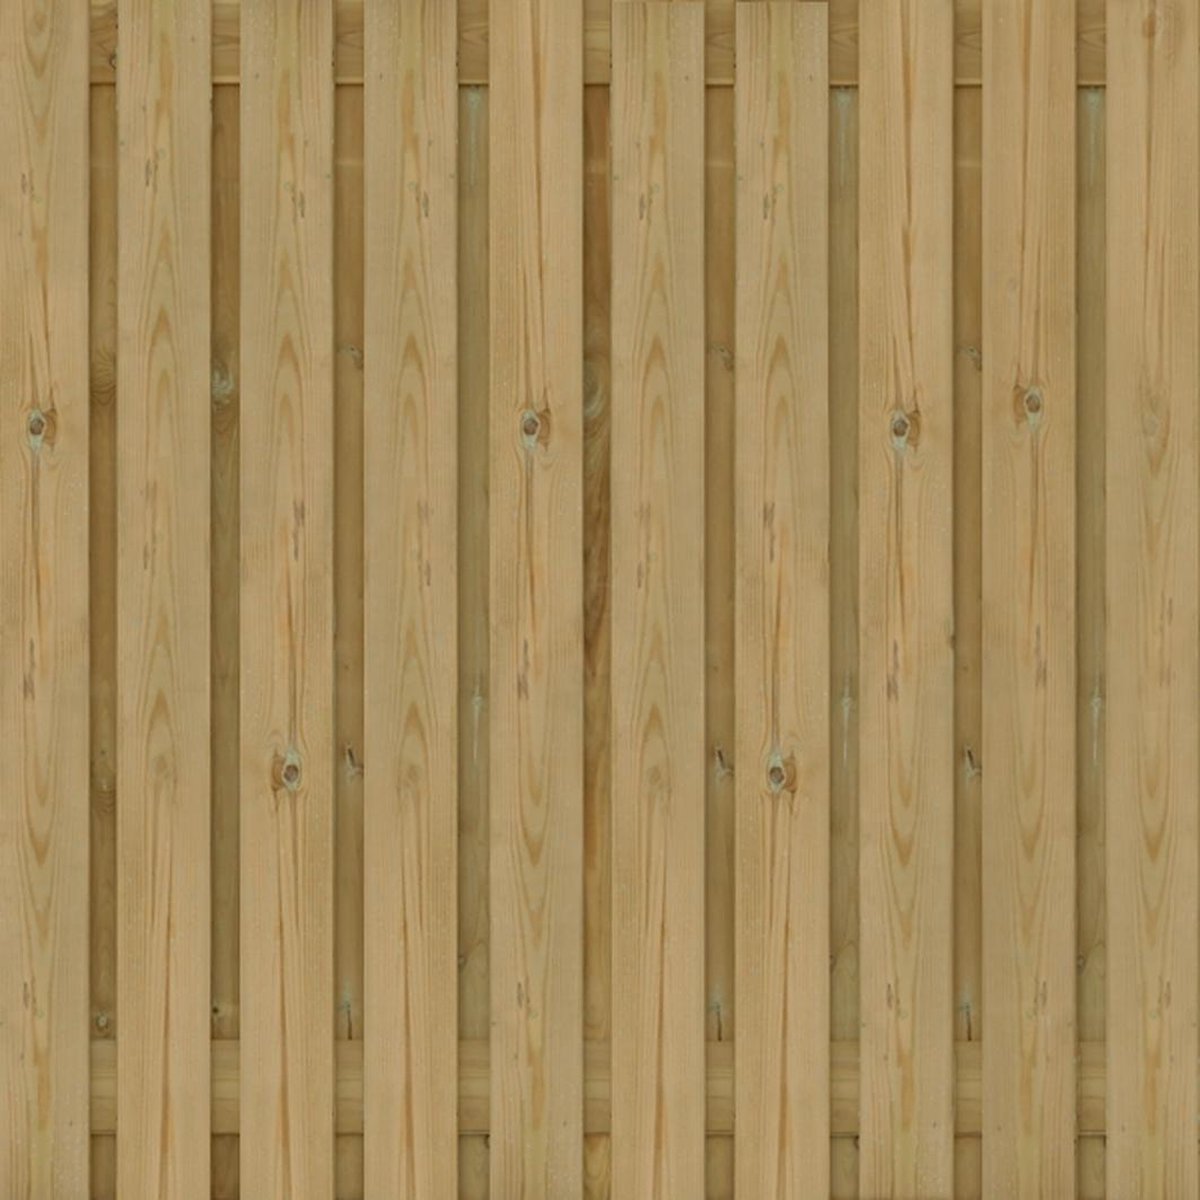 Mega-Schutting - Grenen tuinscherm 21 planks recht - verticaal - 180x180 cm